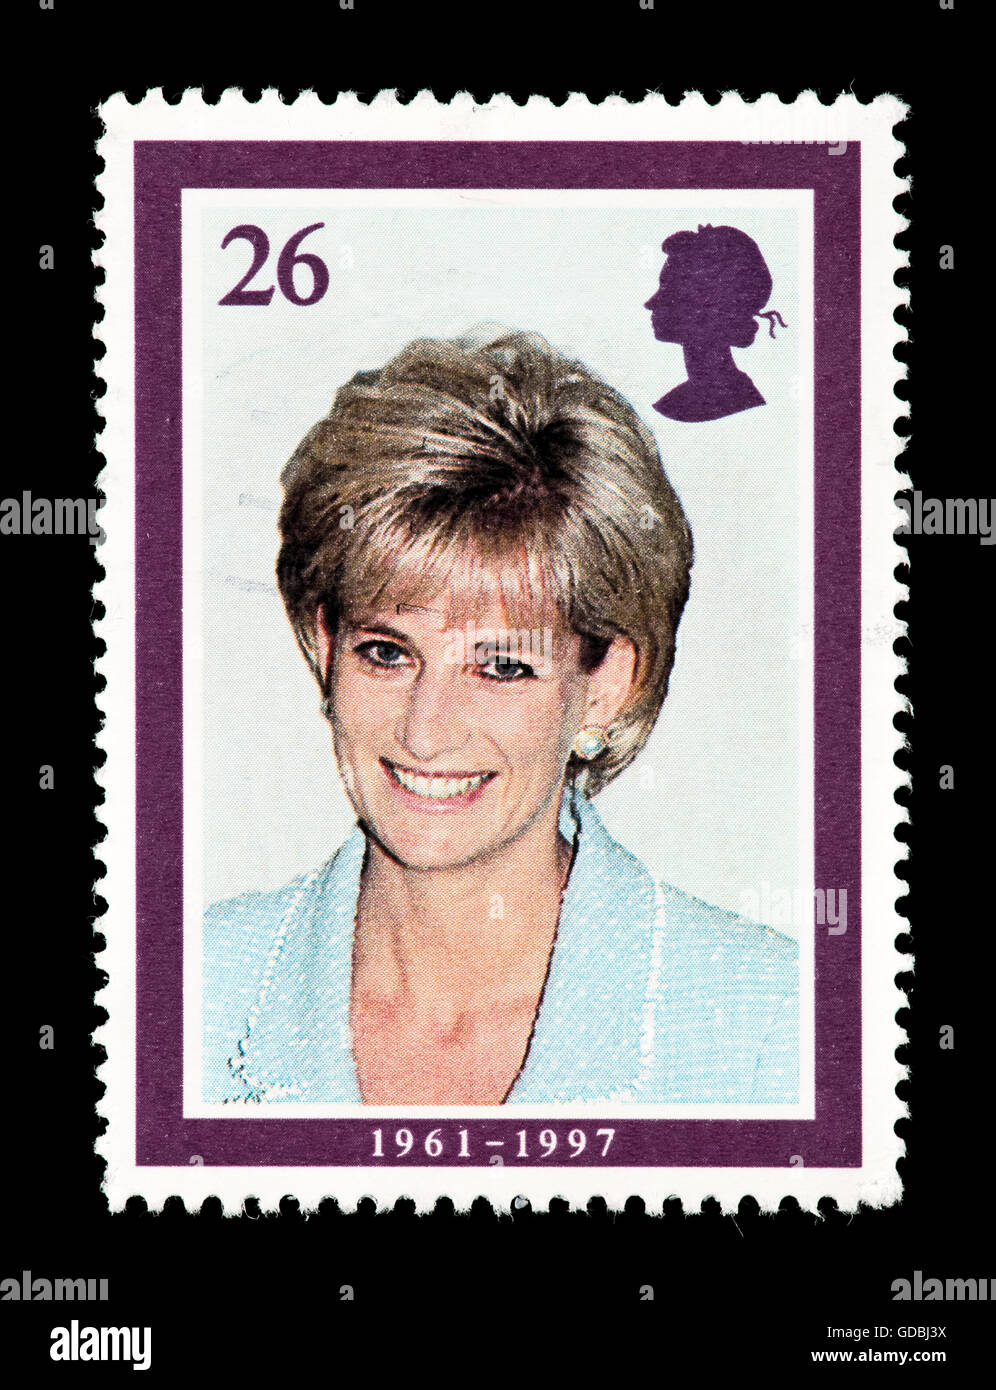 Princess diana stamp hi-res stock photography and images - Alamy